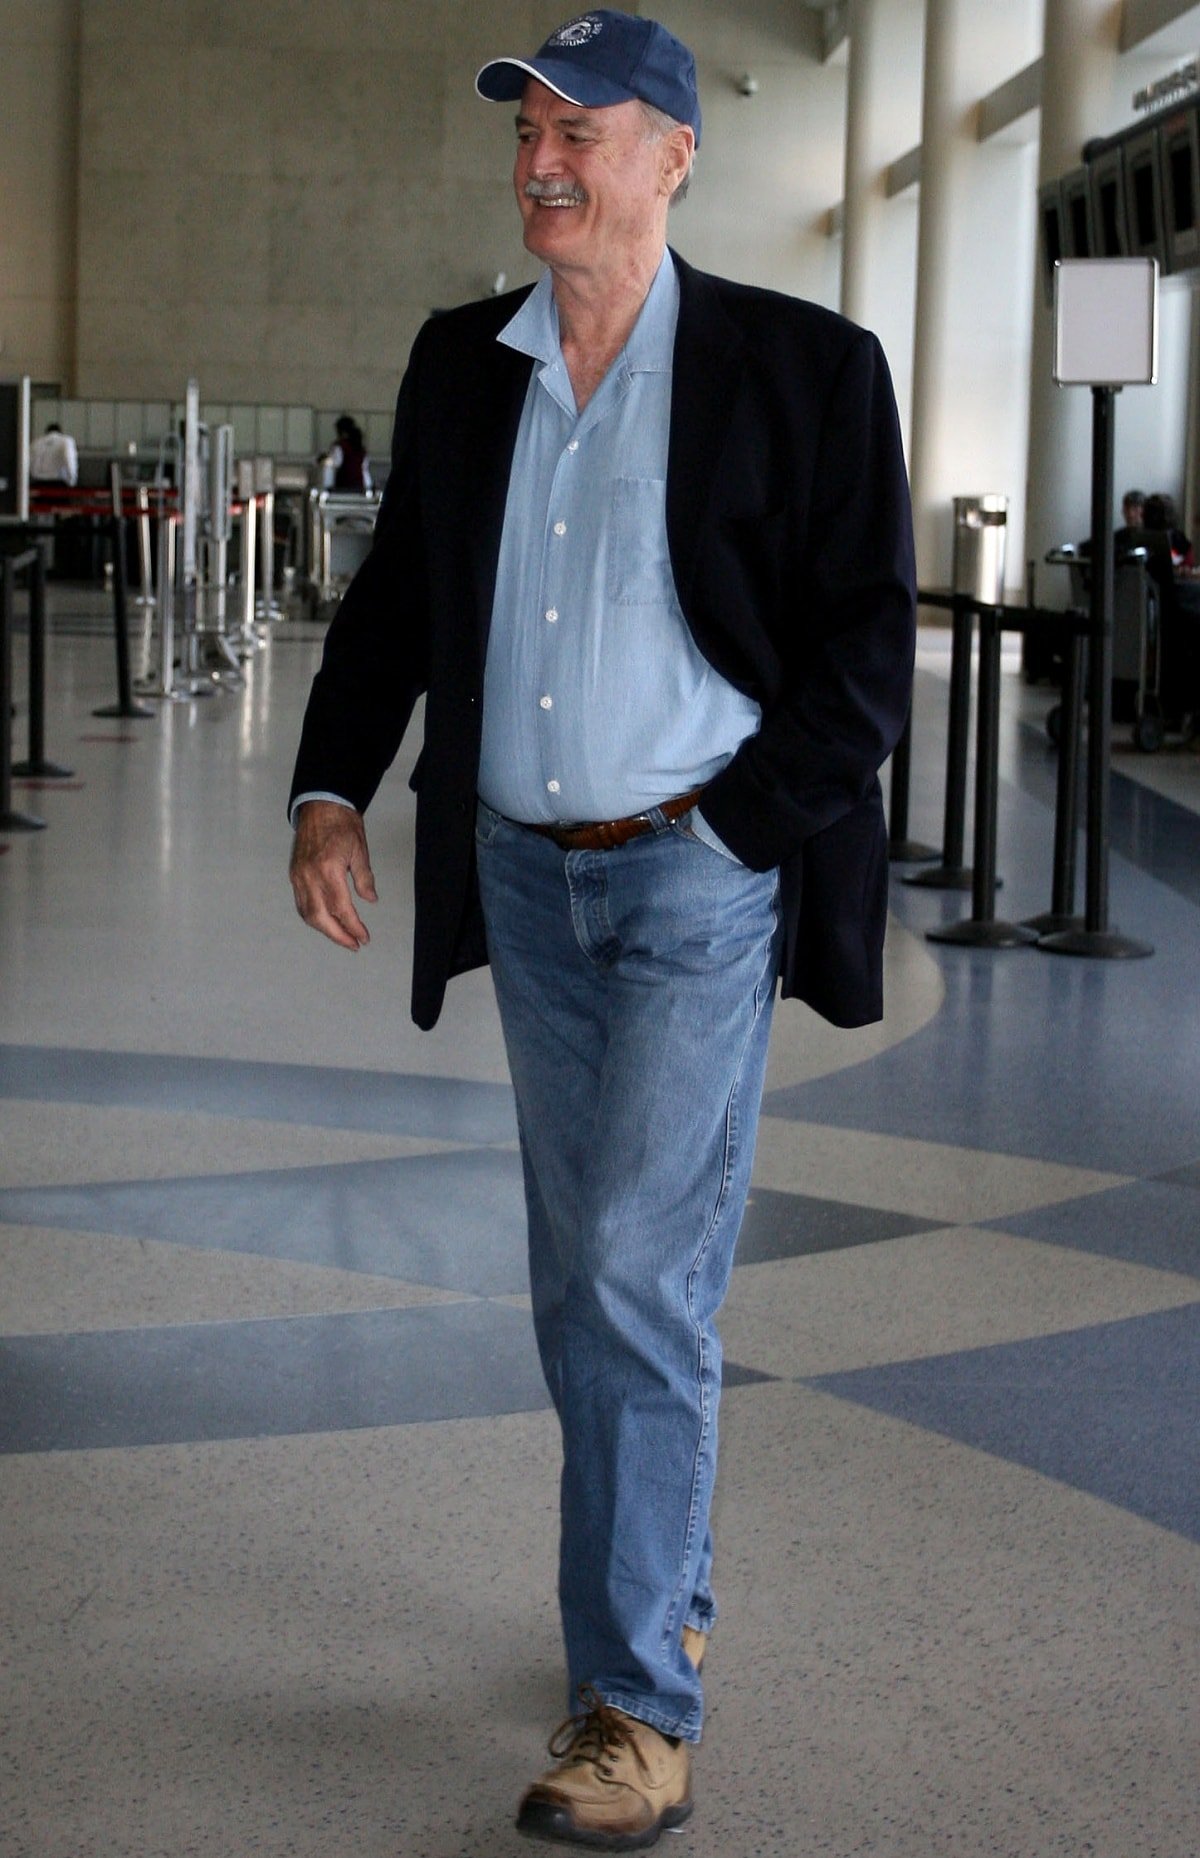 John Cleese arriving at the Los Angeles International Airport